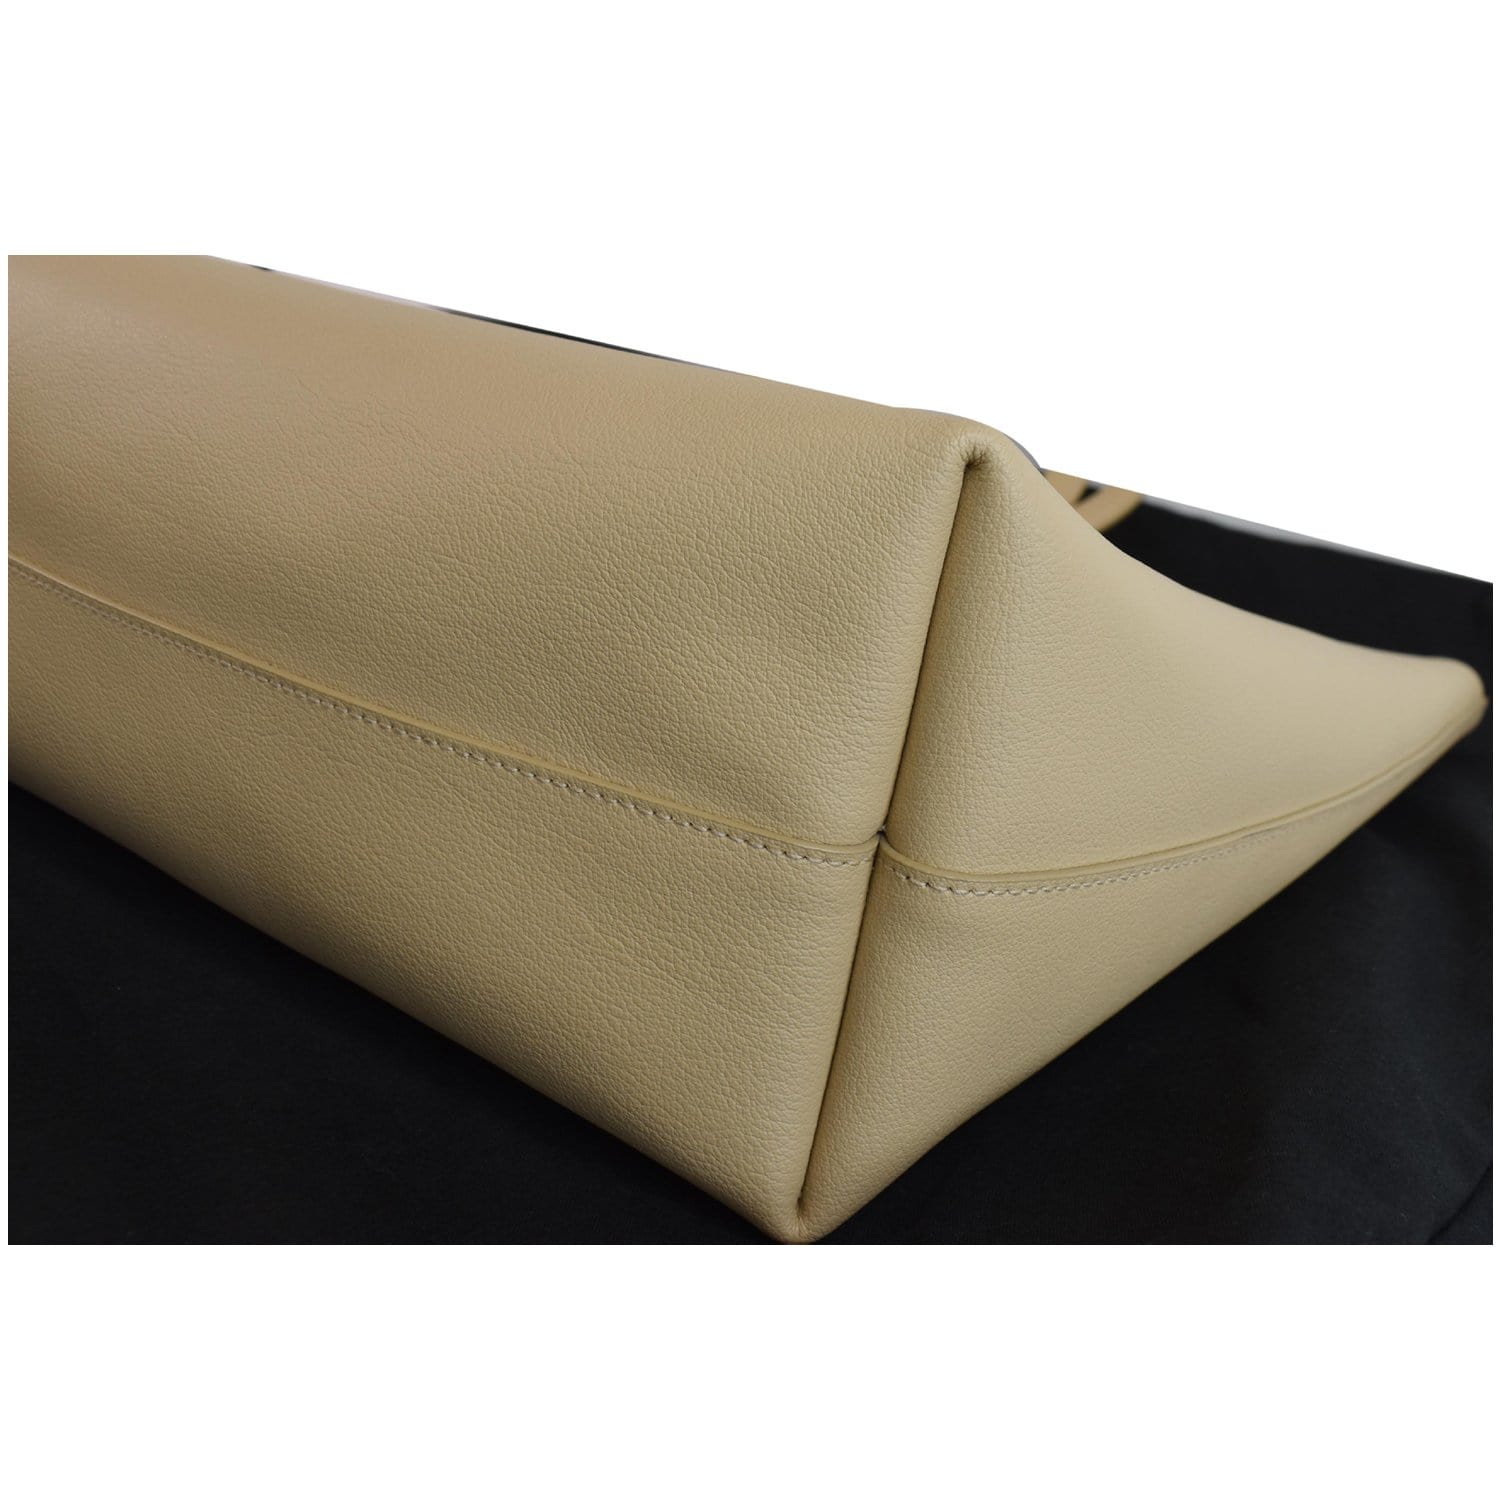 Shopping leather handbag Saint Laurent Beige in Leather - 27449776